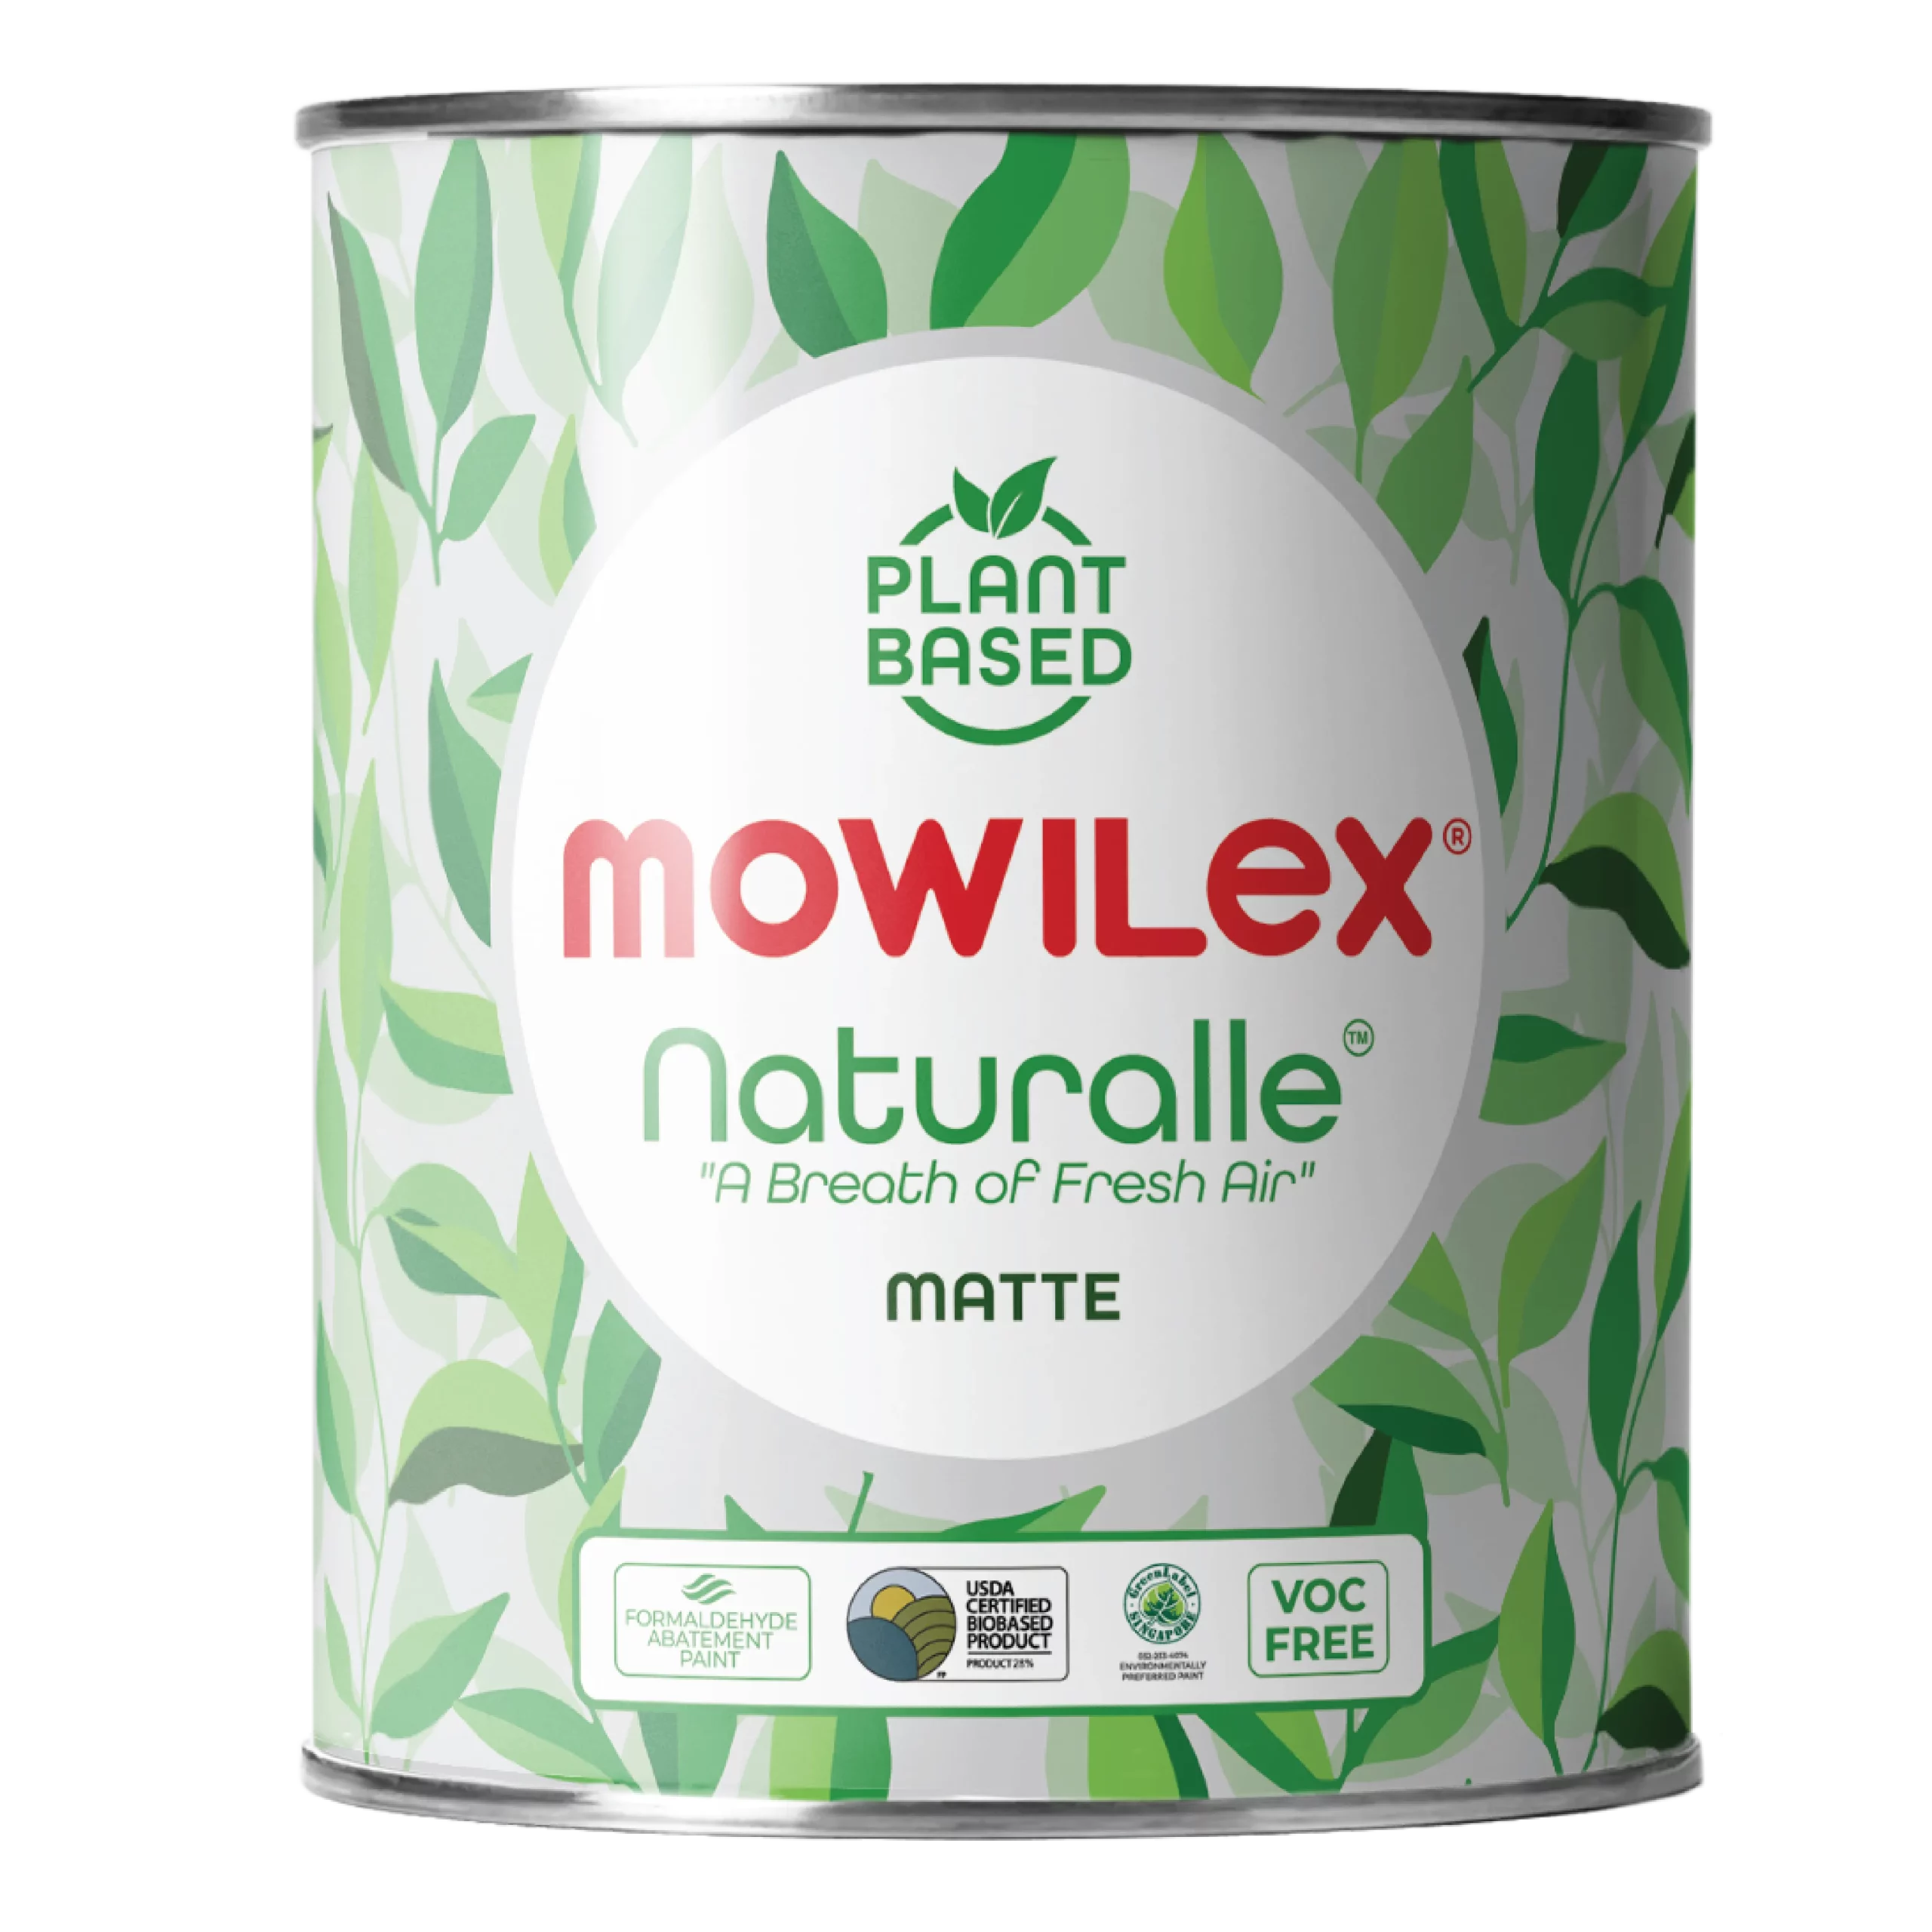 Mowilex Naturalle